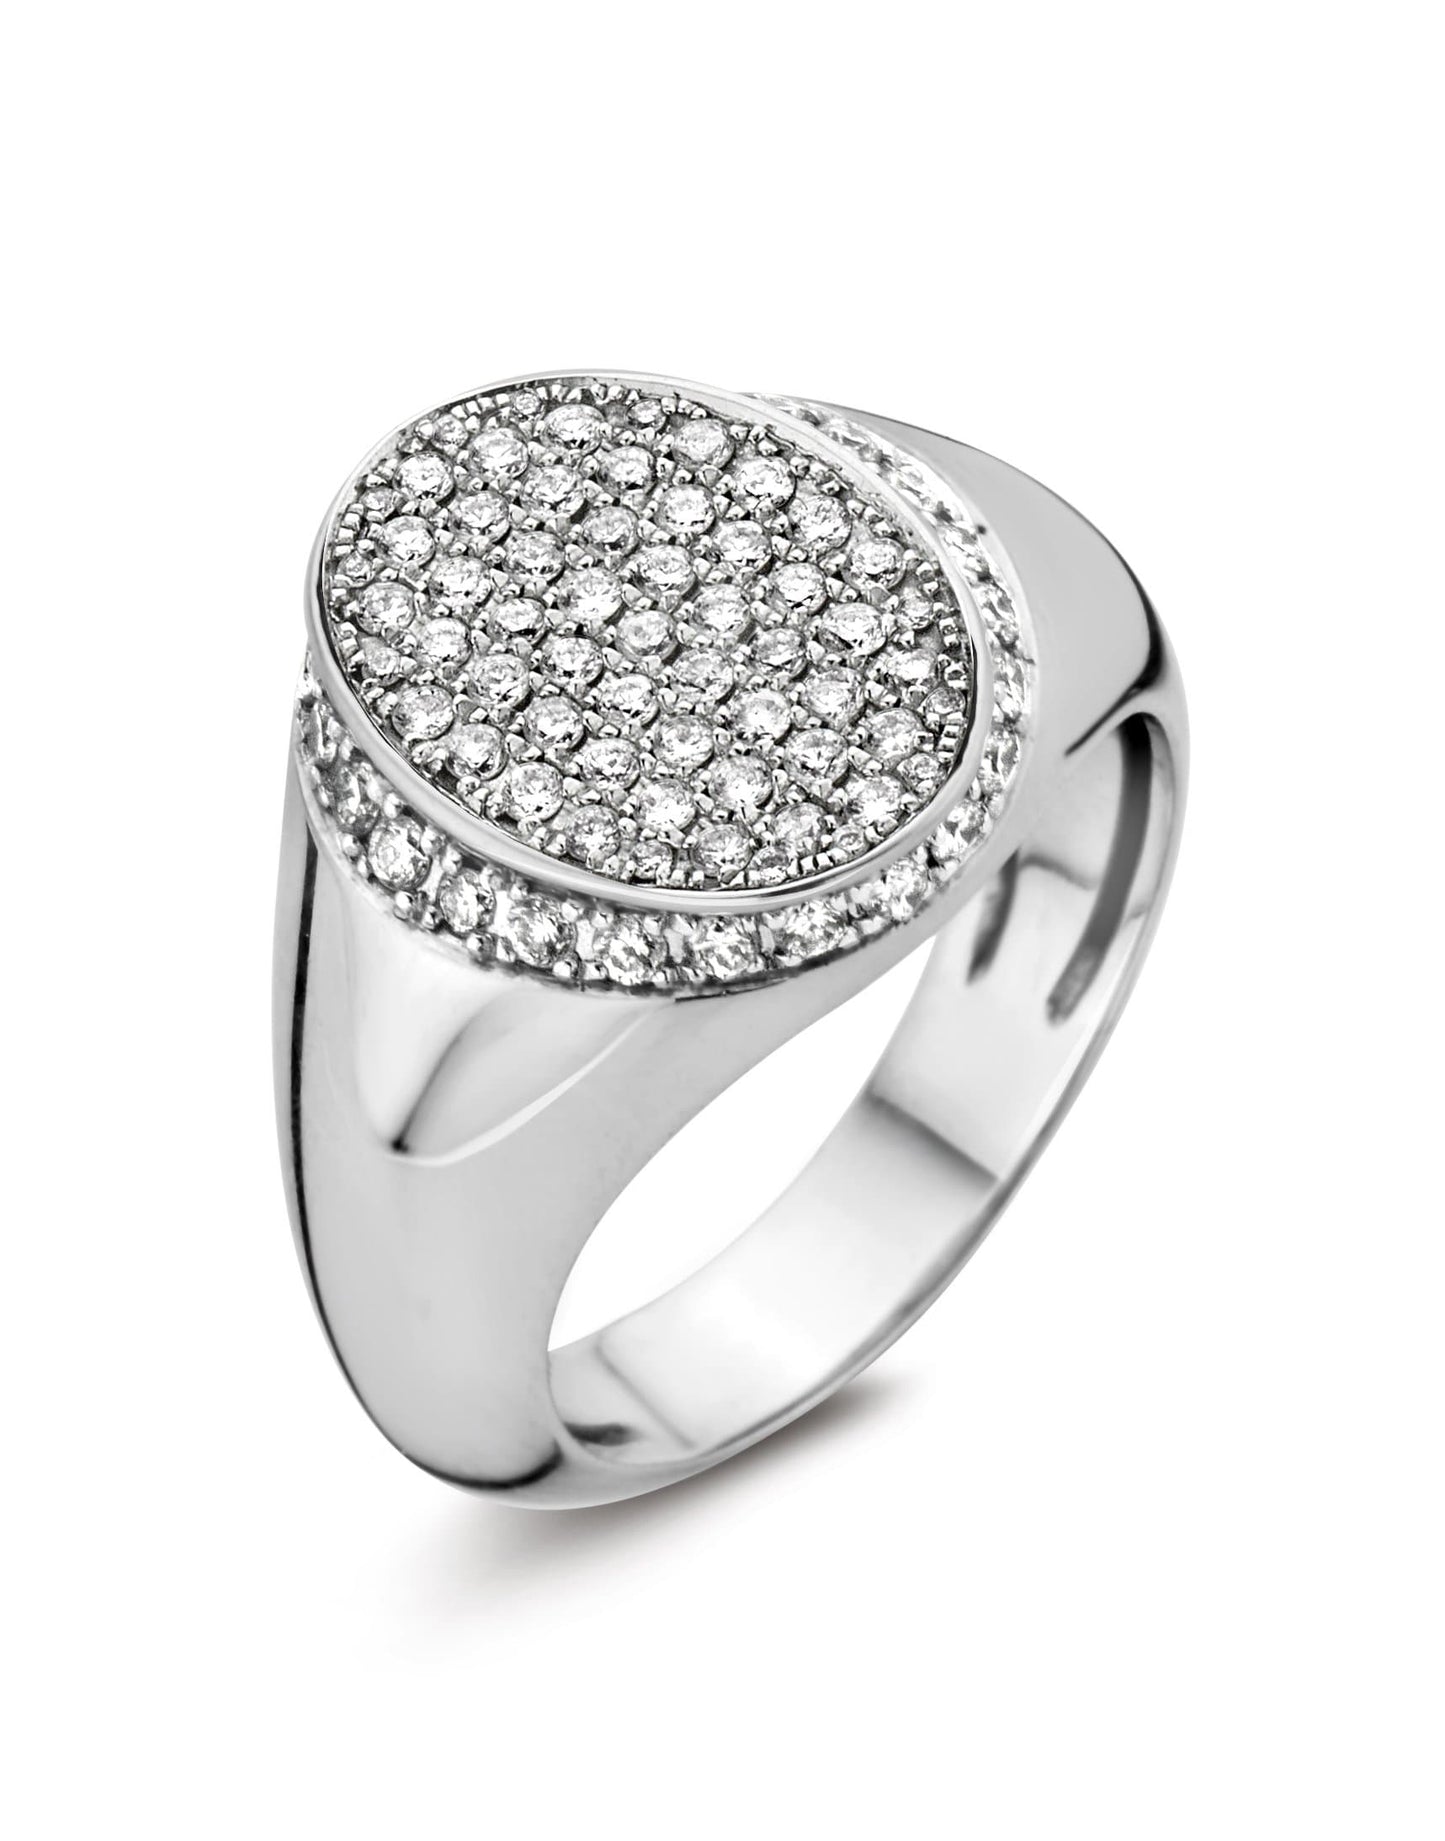 DRIES CRIEL-Classic White Diamond SIGNET Ring-7